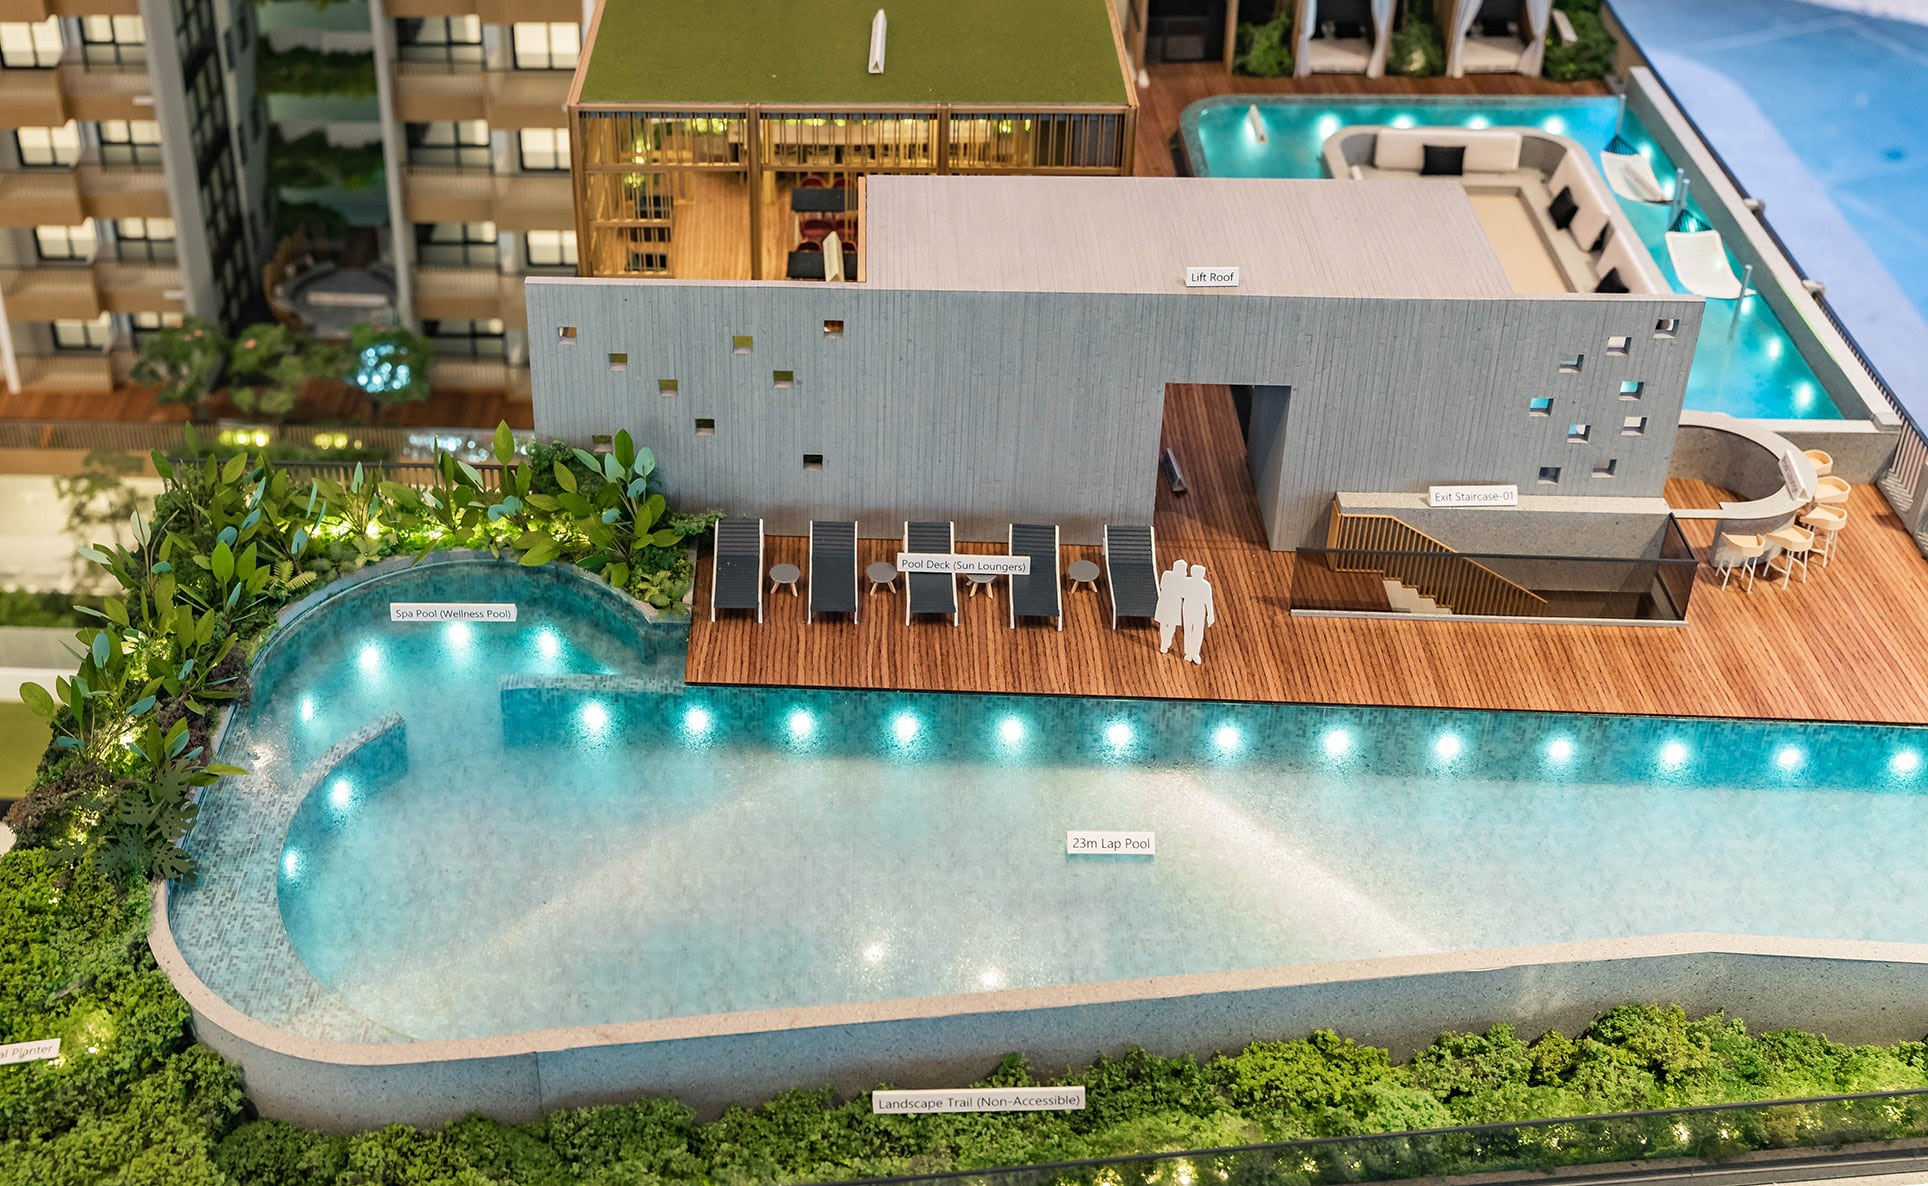 Mori Condo Landscape Design -Showflat Model 01 (23m Lap Pool)